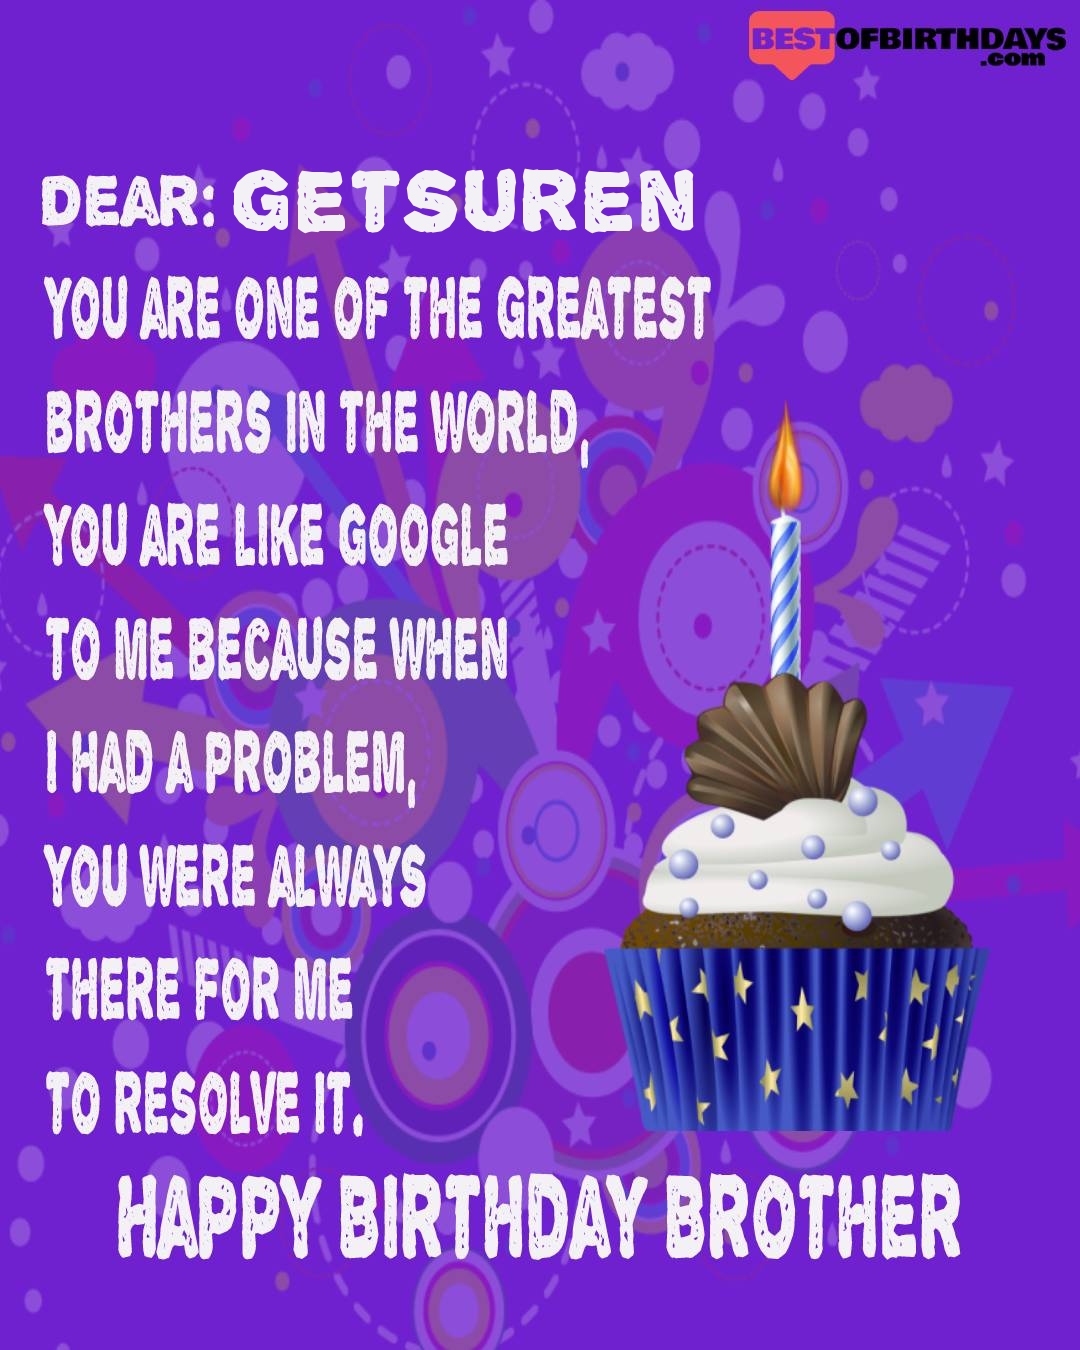 Happy birthday getsuren bhai brother bro